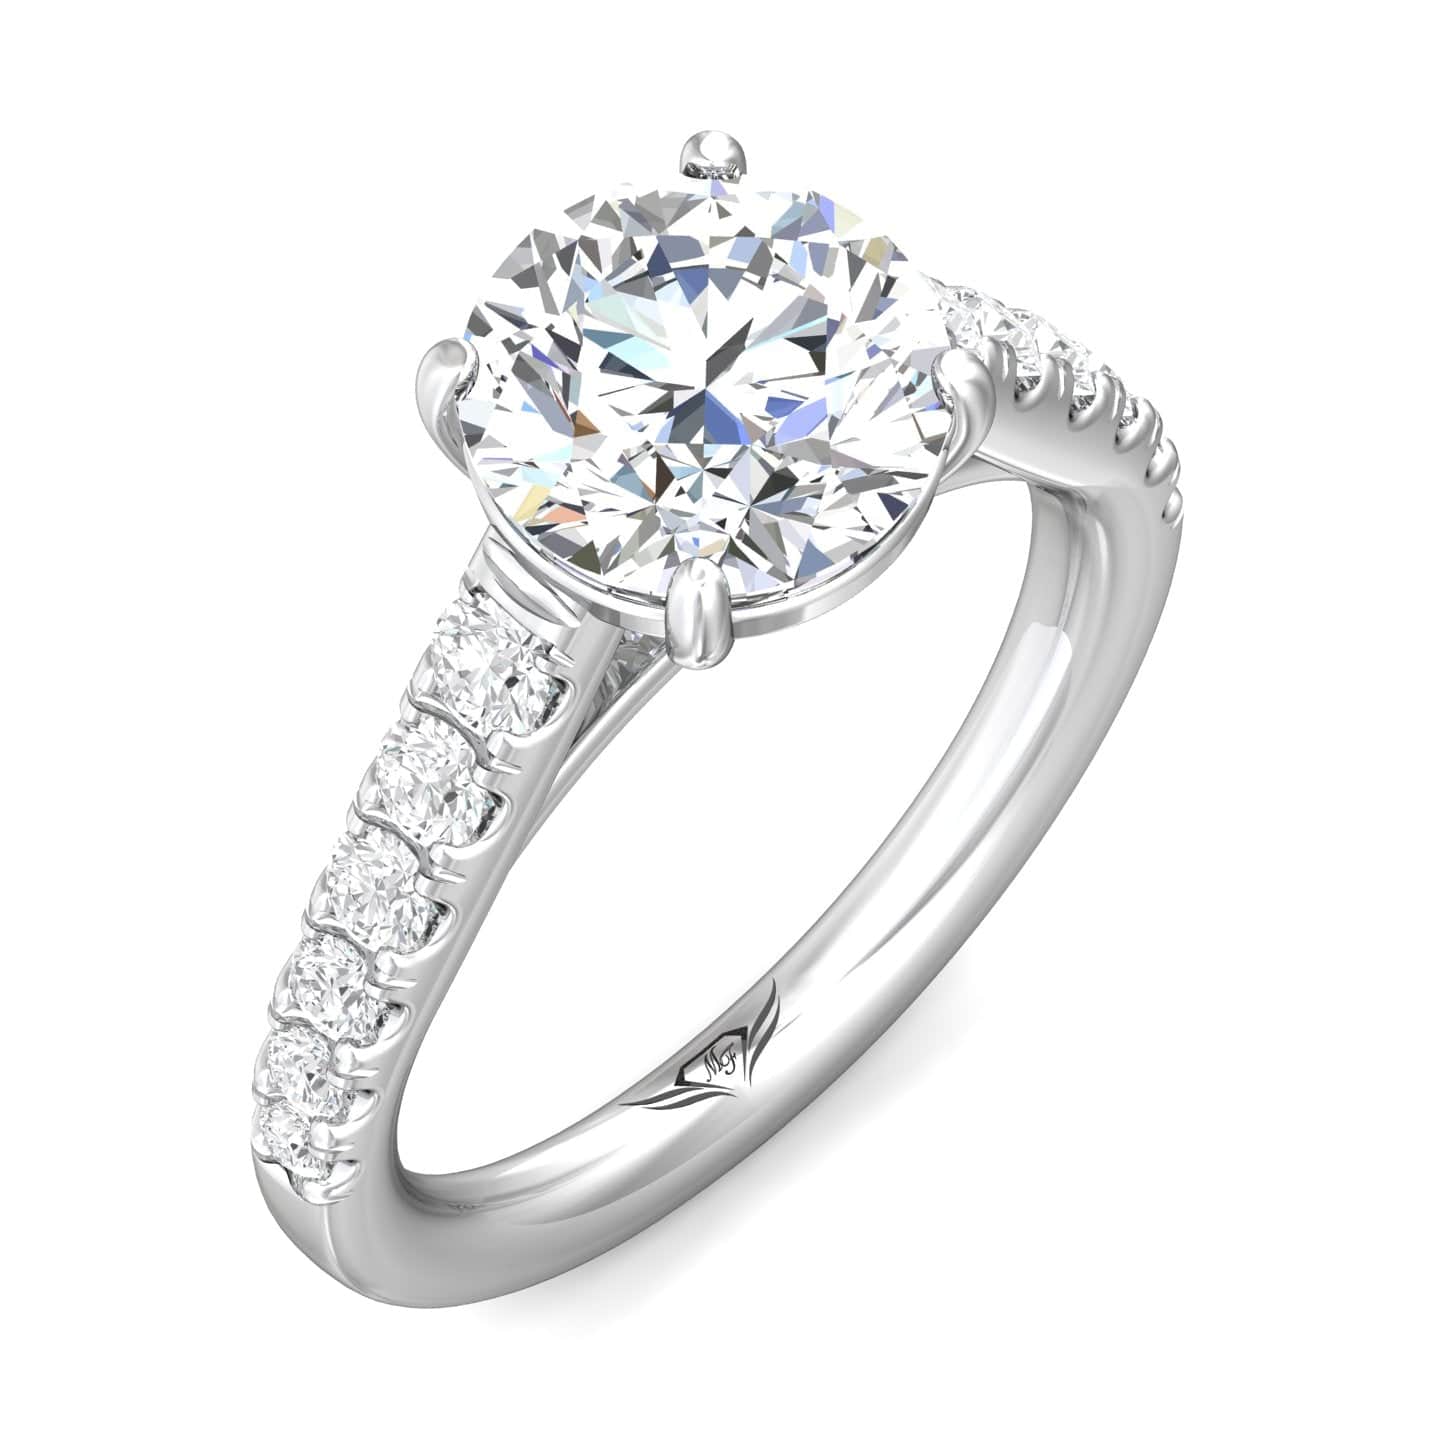 Platinum 4 Prong Cathedral Diamond Engagement Setting